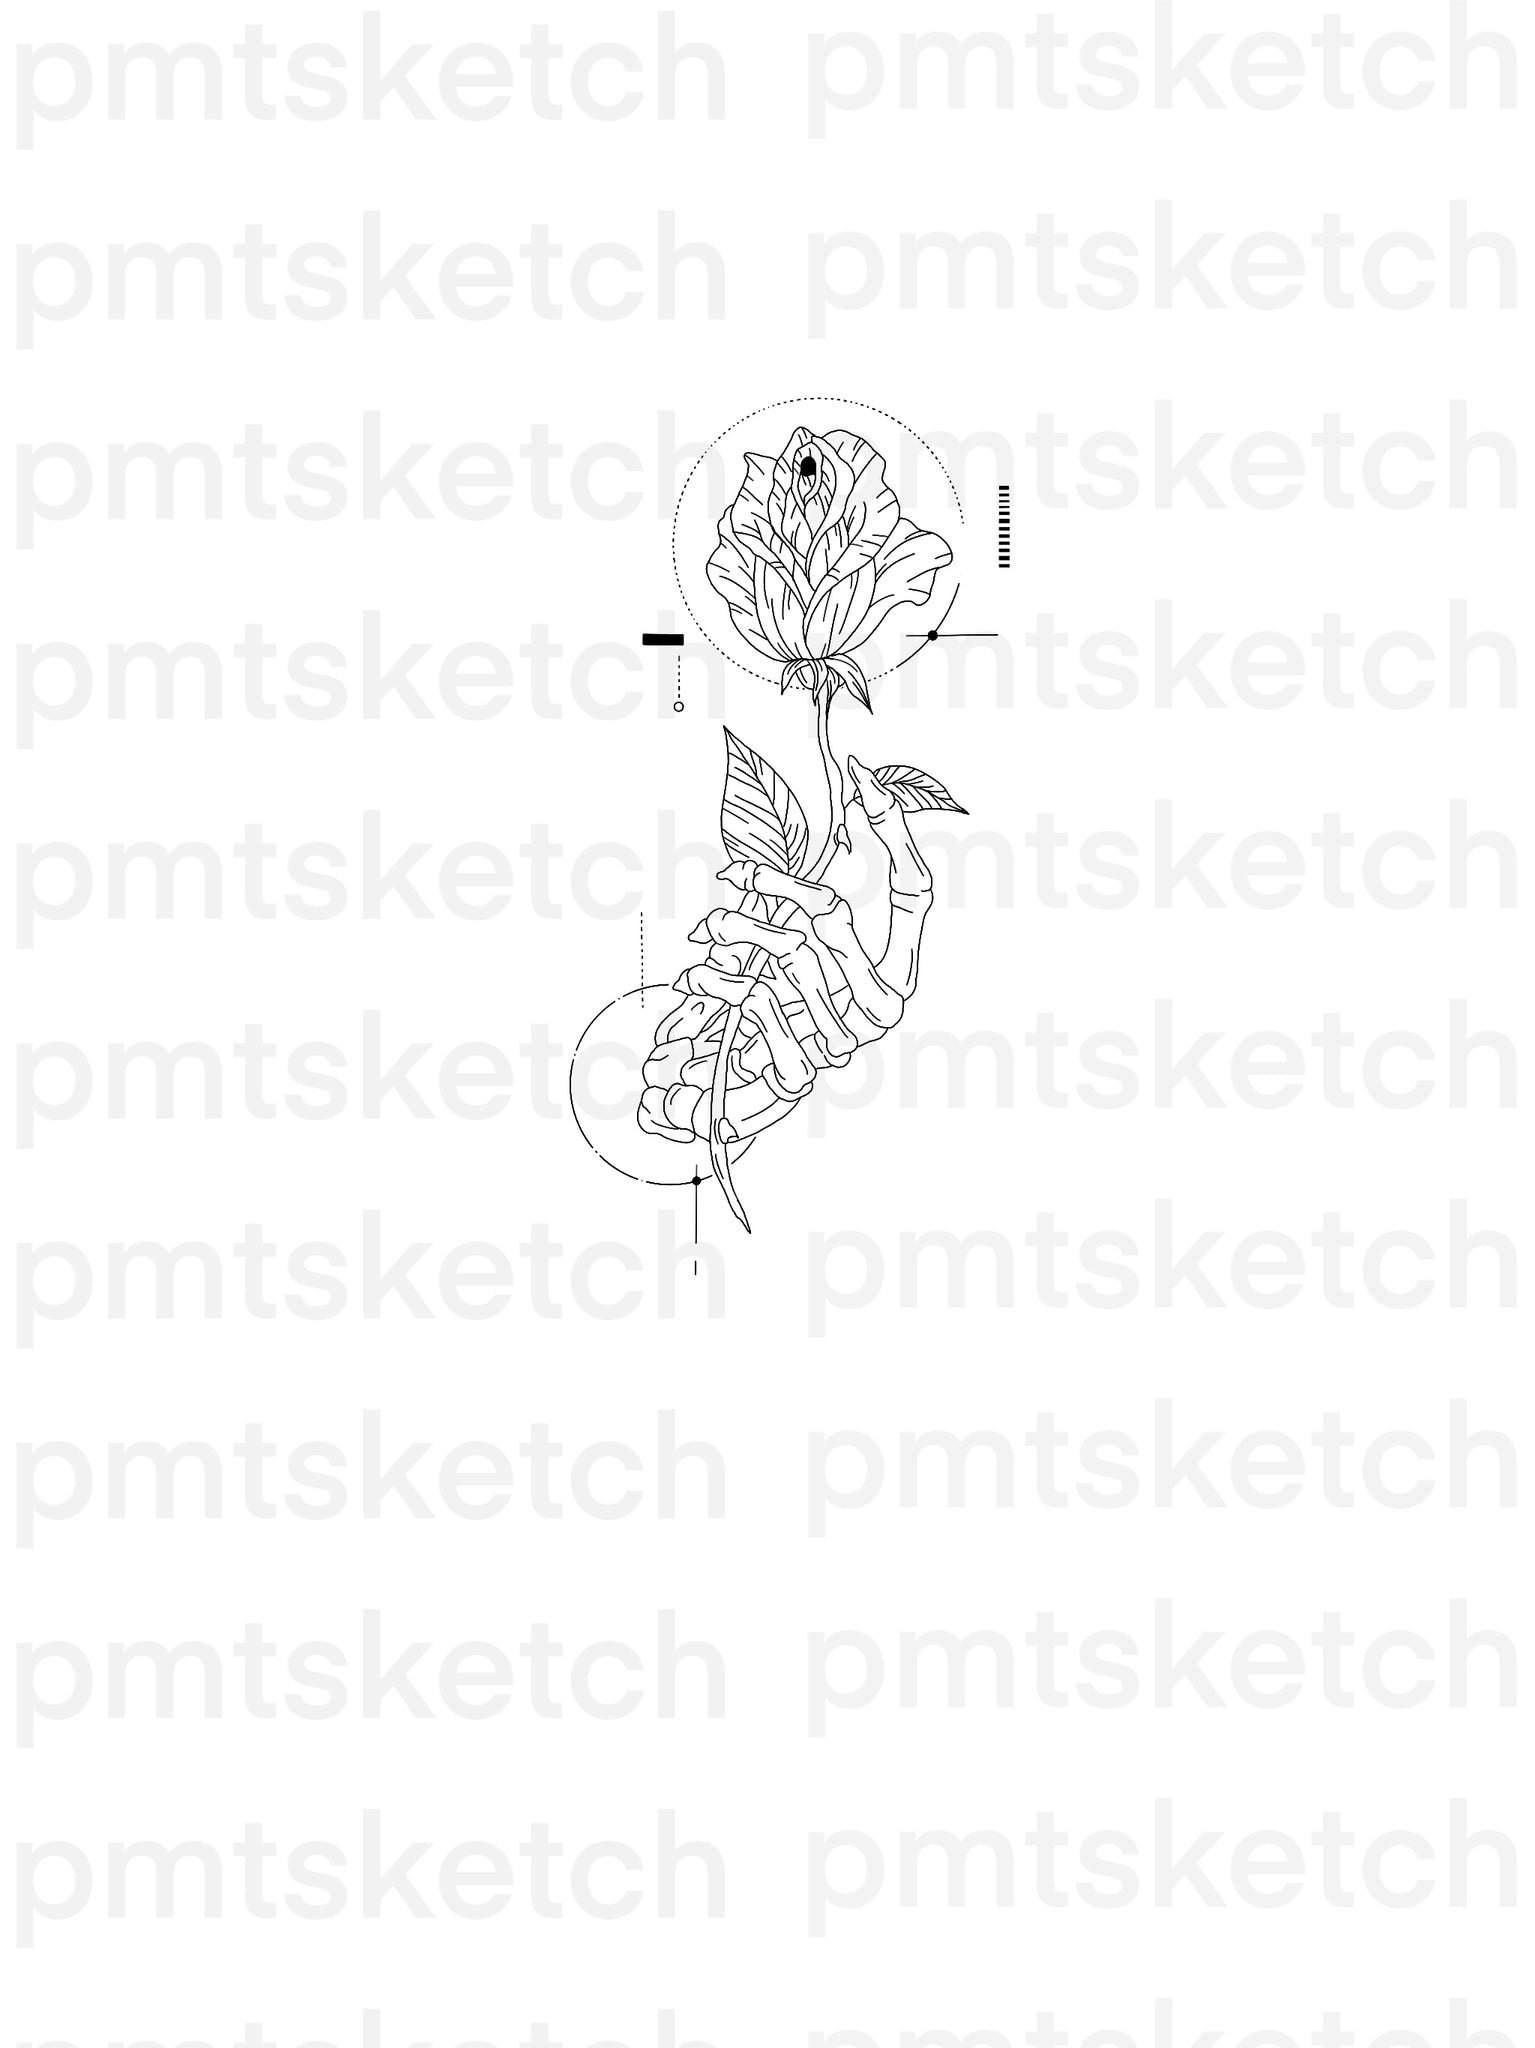 Skeleton Hand / Rose